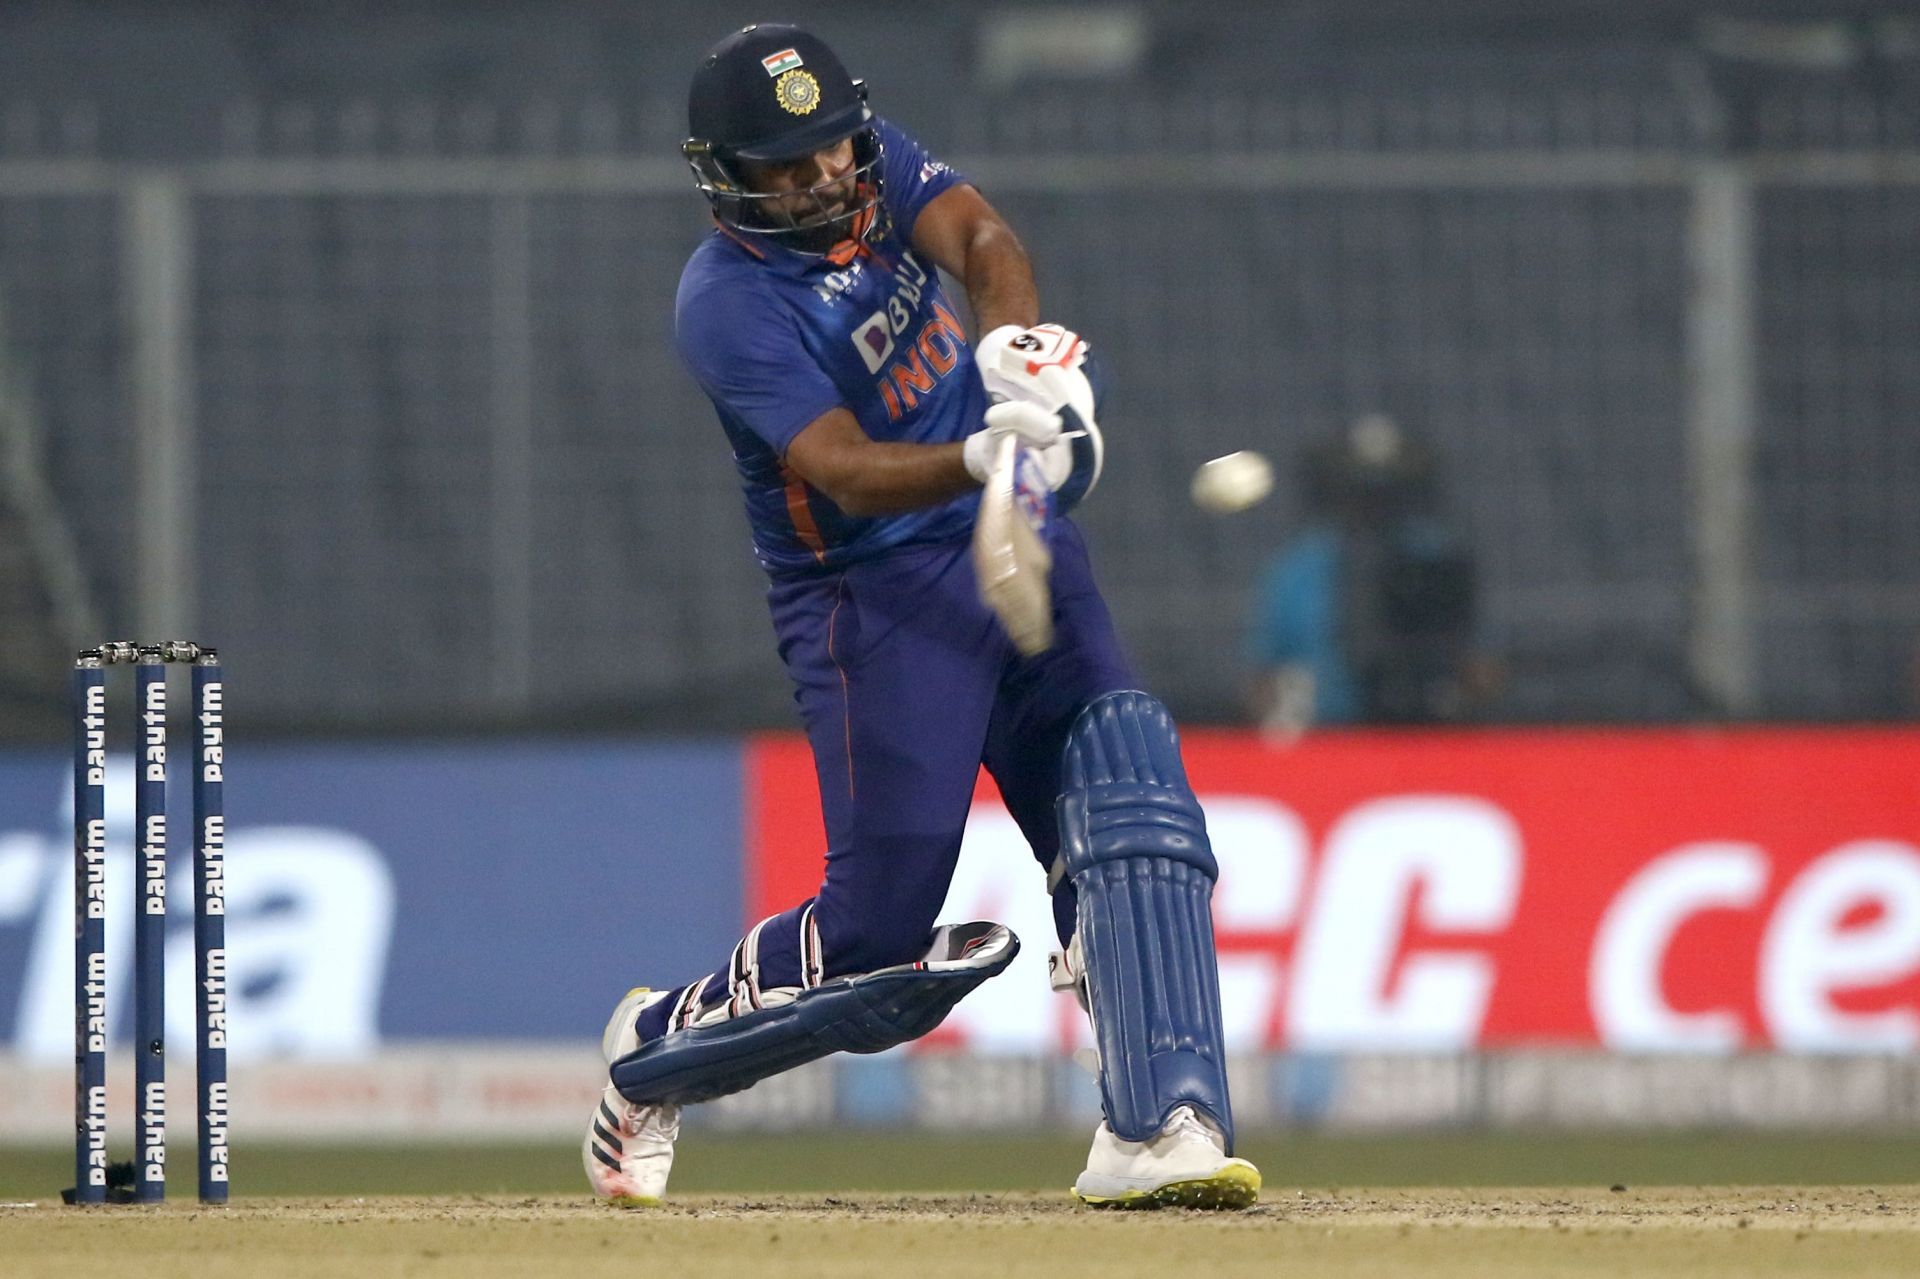 India captain Rohit Sharma batted at No. 4 and failed miserably